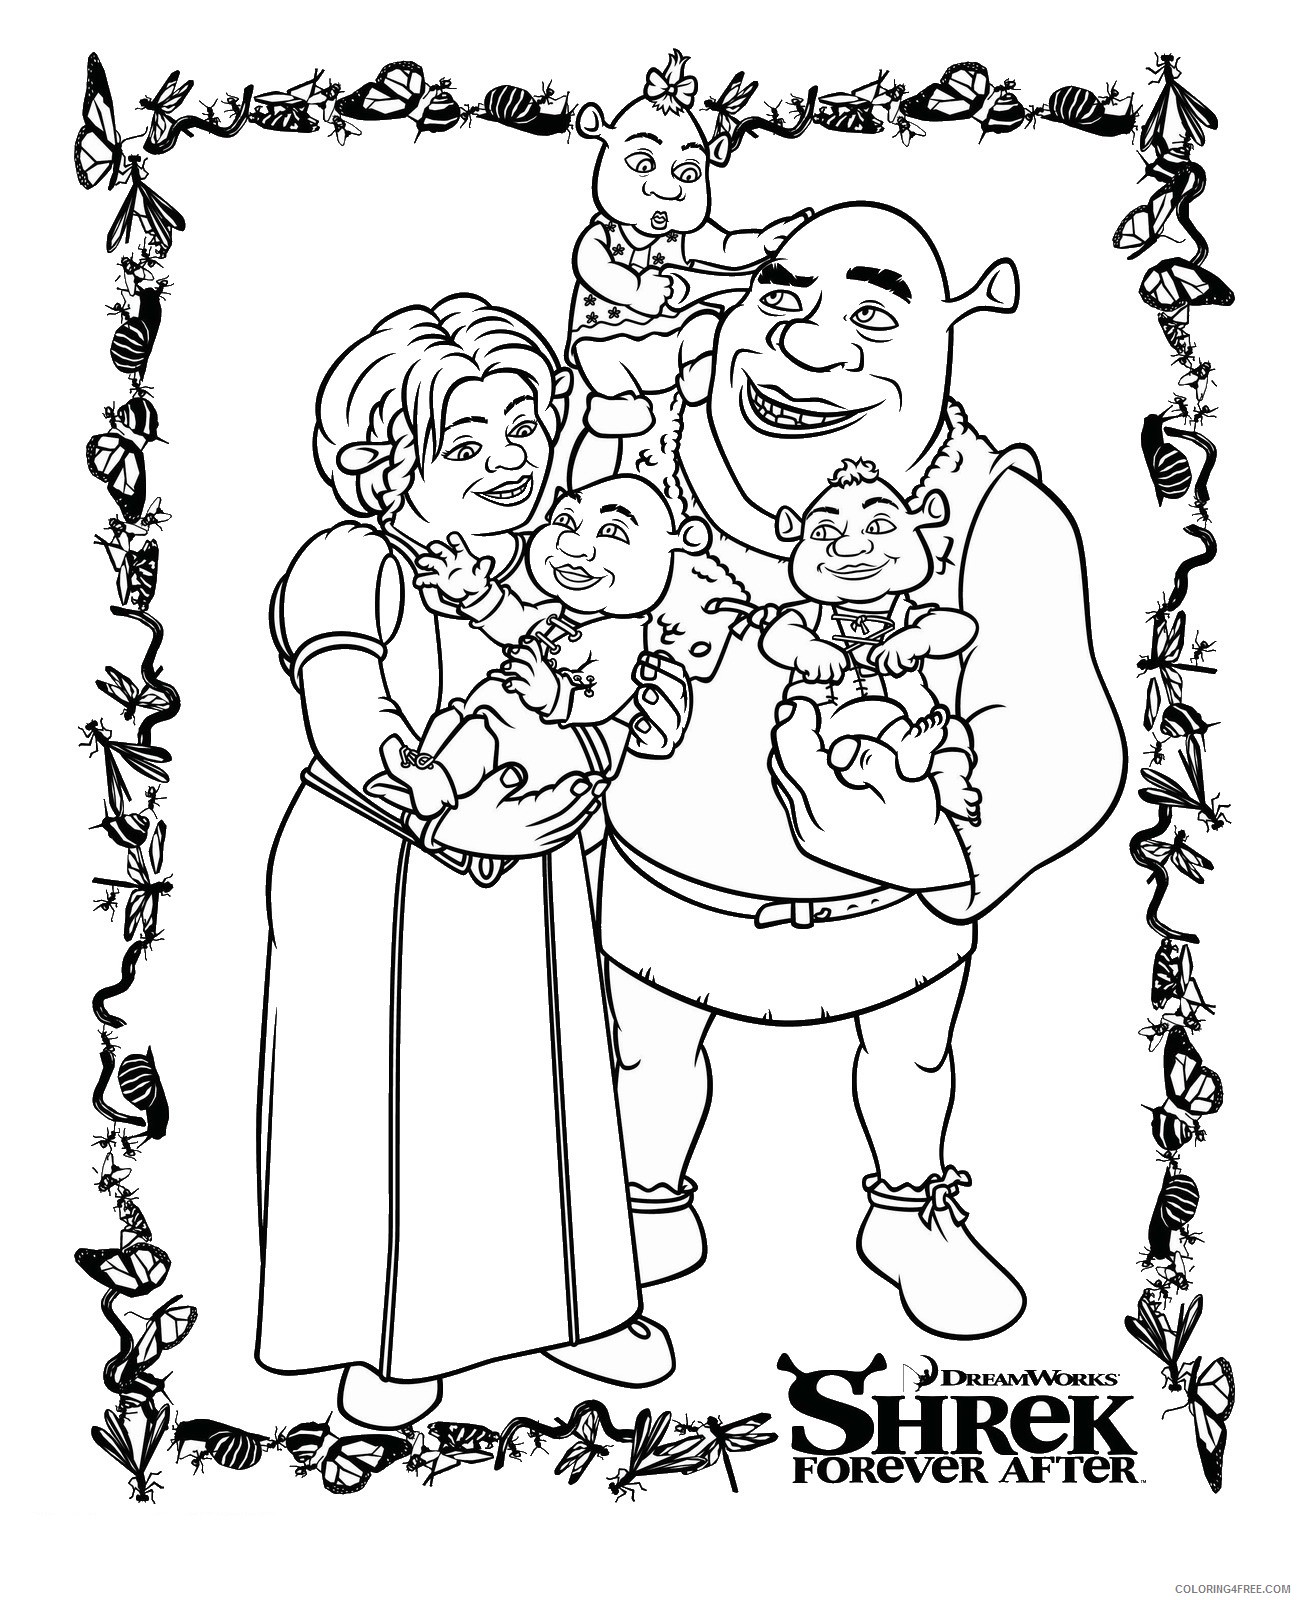 Shrek Coloring Pages Cartoons shrek_08 Printable 2020 5418 Coloring4free